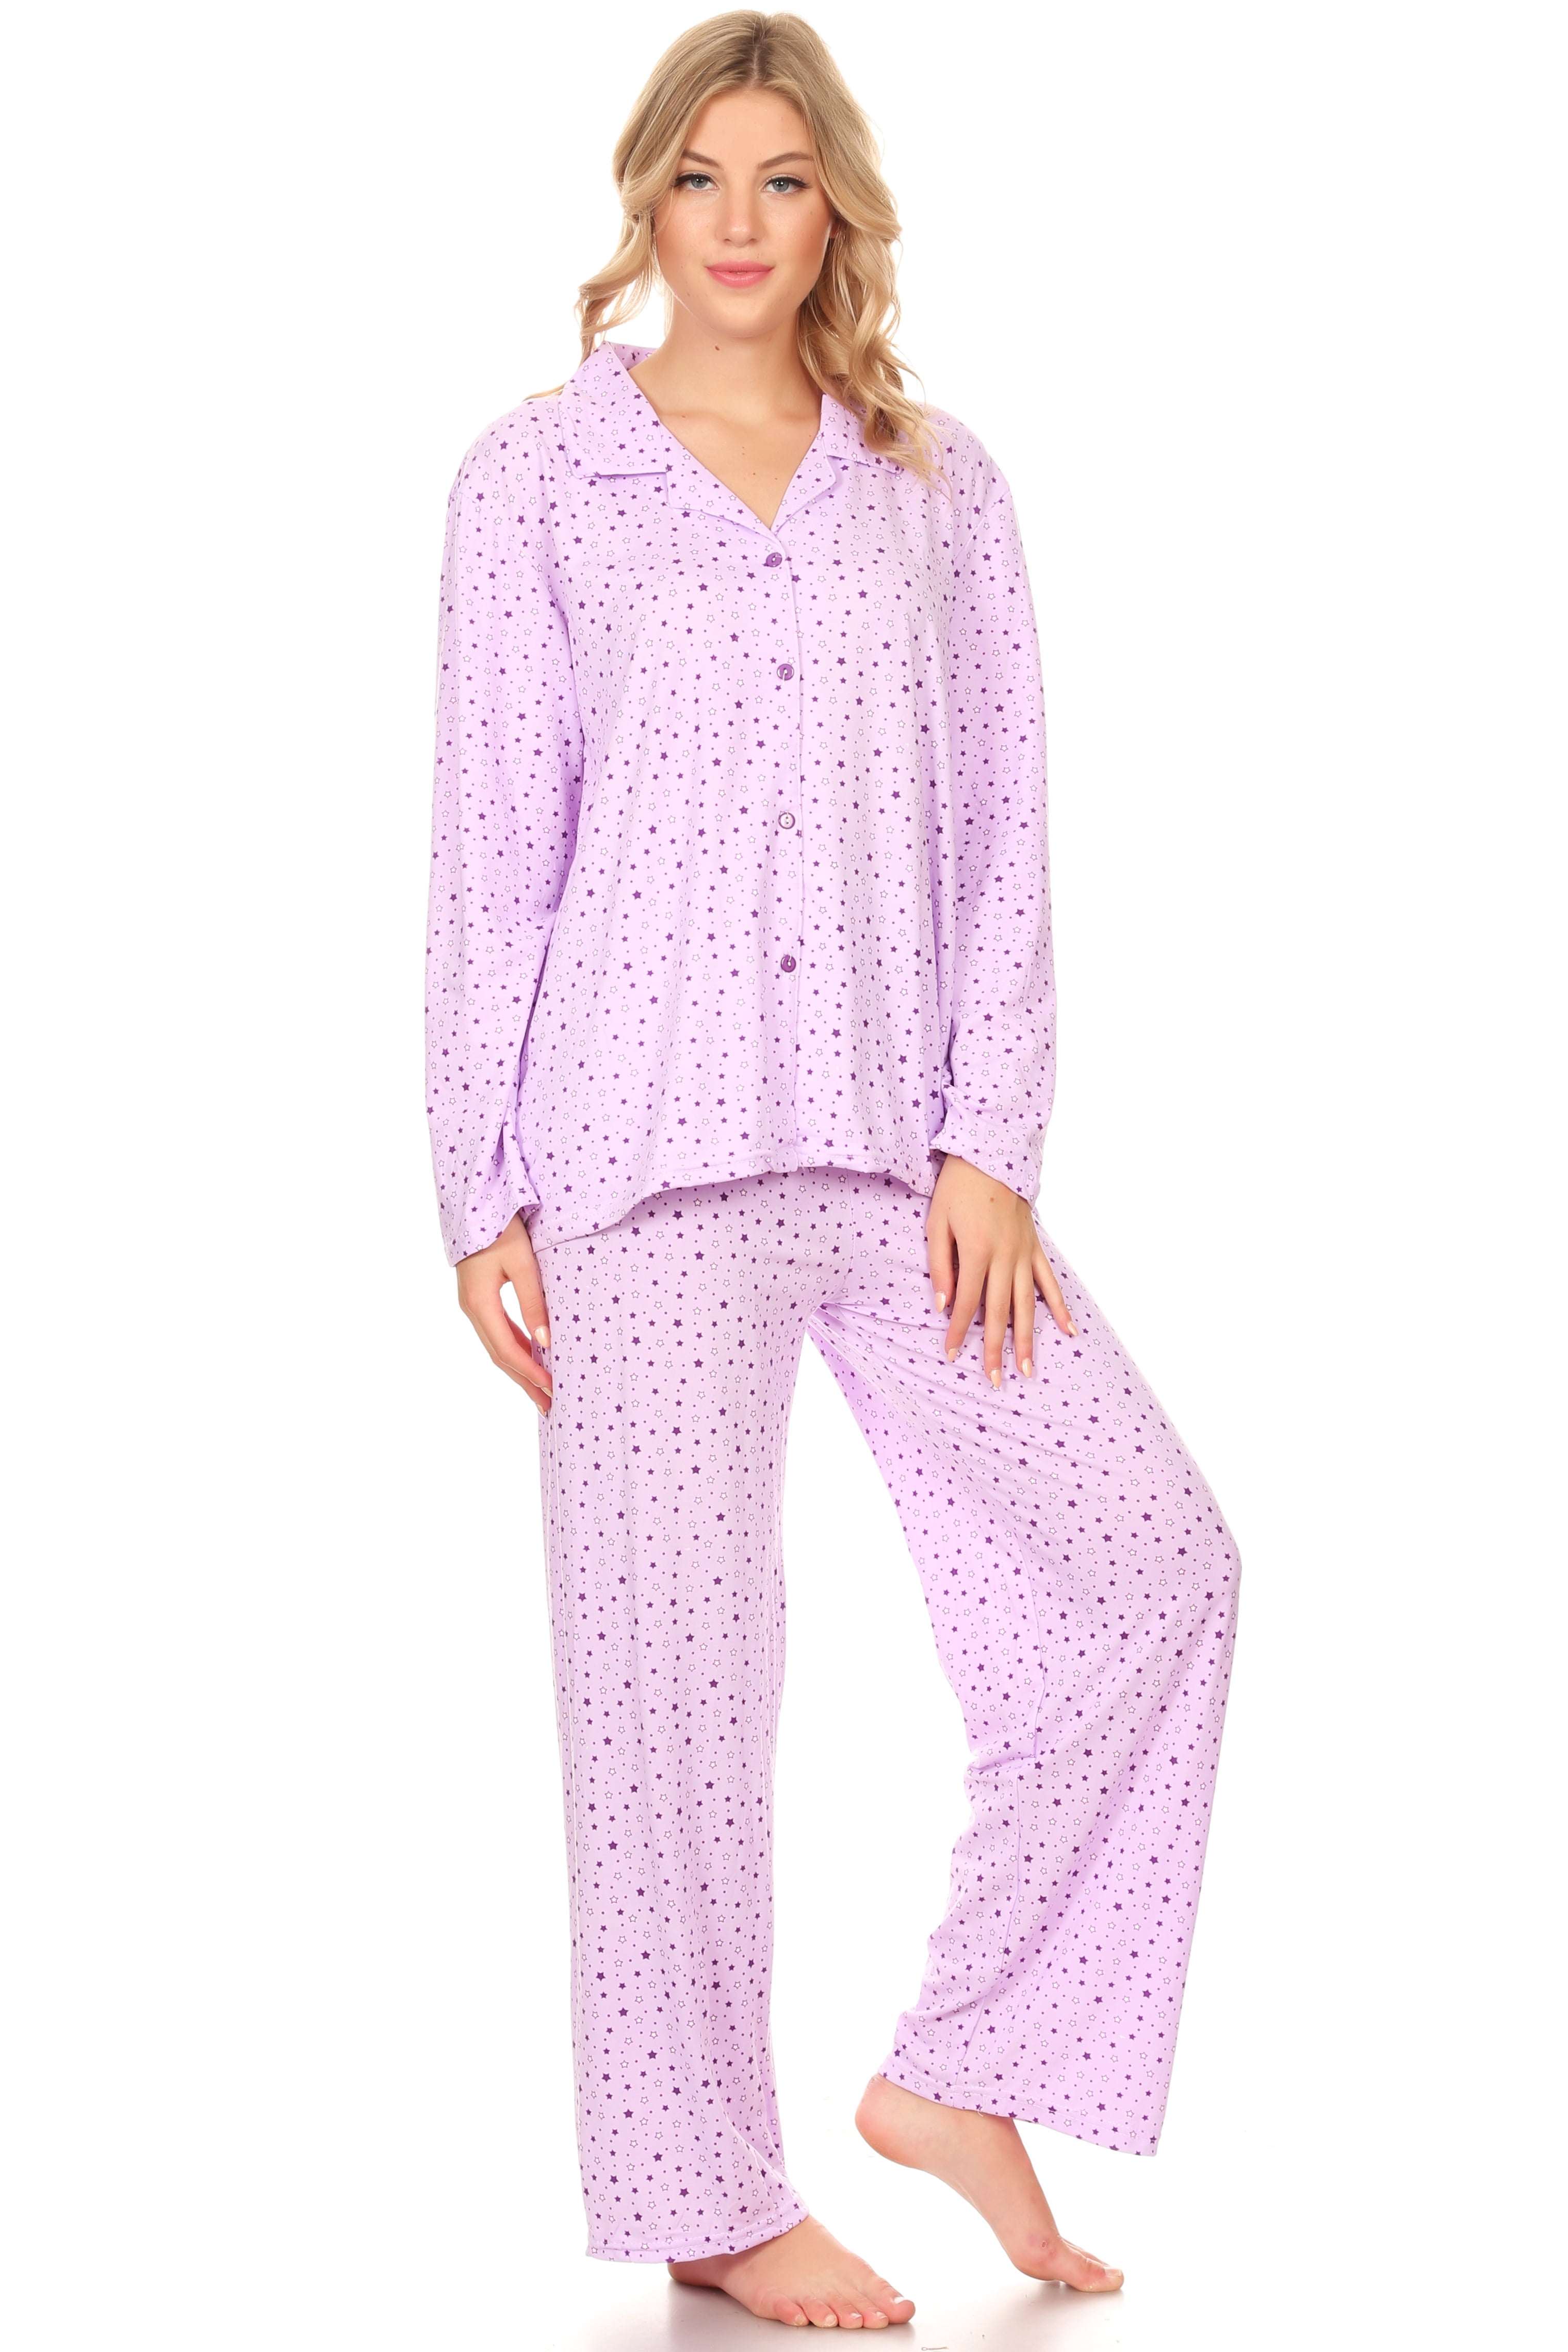 Fashion Brands Group Z2151 Womens Sleepwear Pajamas Woman Long Sleeve